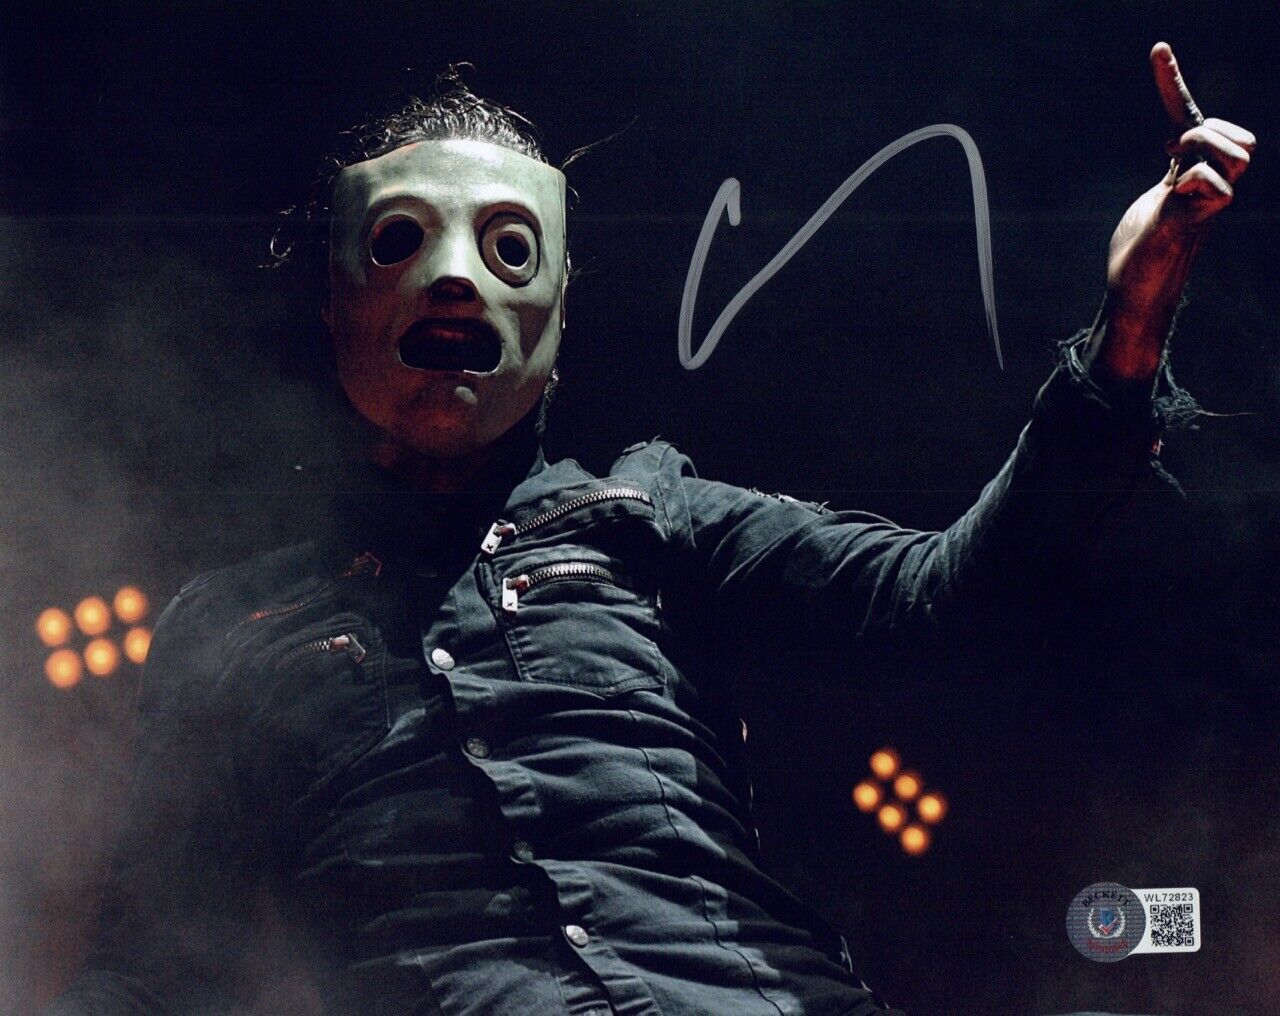 Corey Taylor Signed Autographed 8x10 Photo Poster painting Slipknot Beckett BAS COA